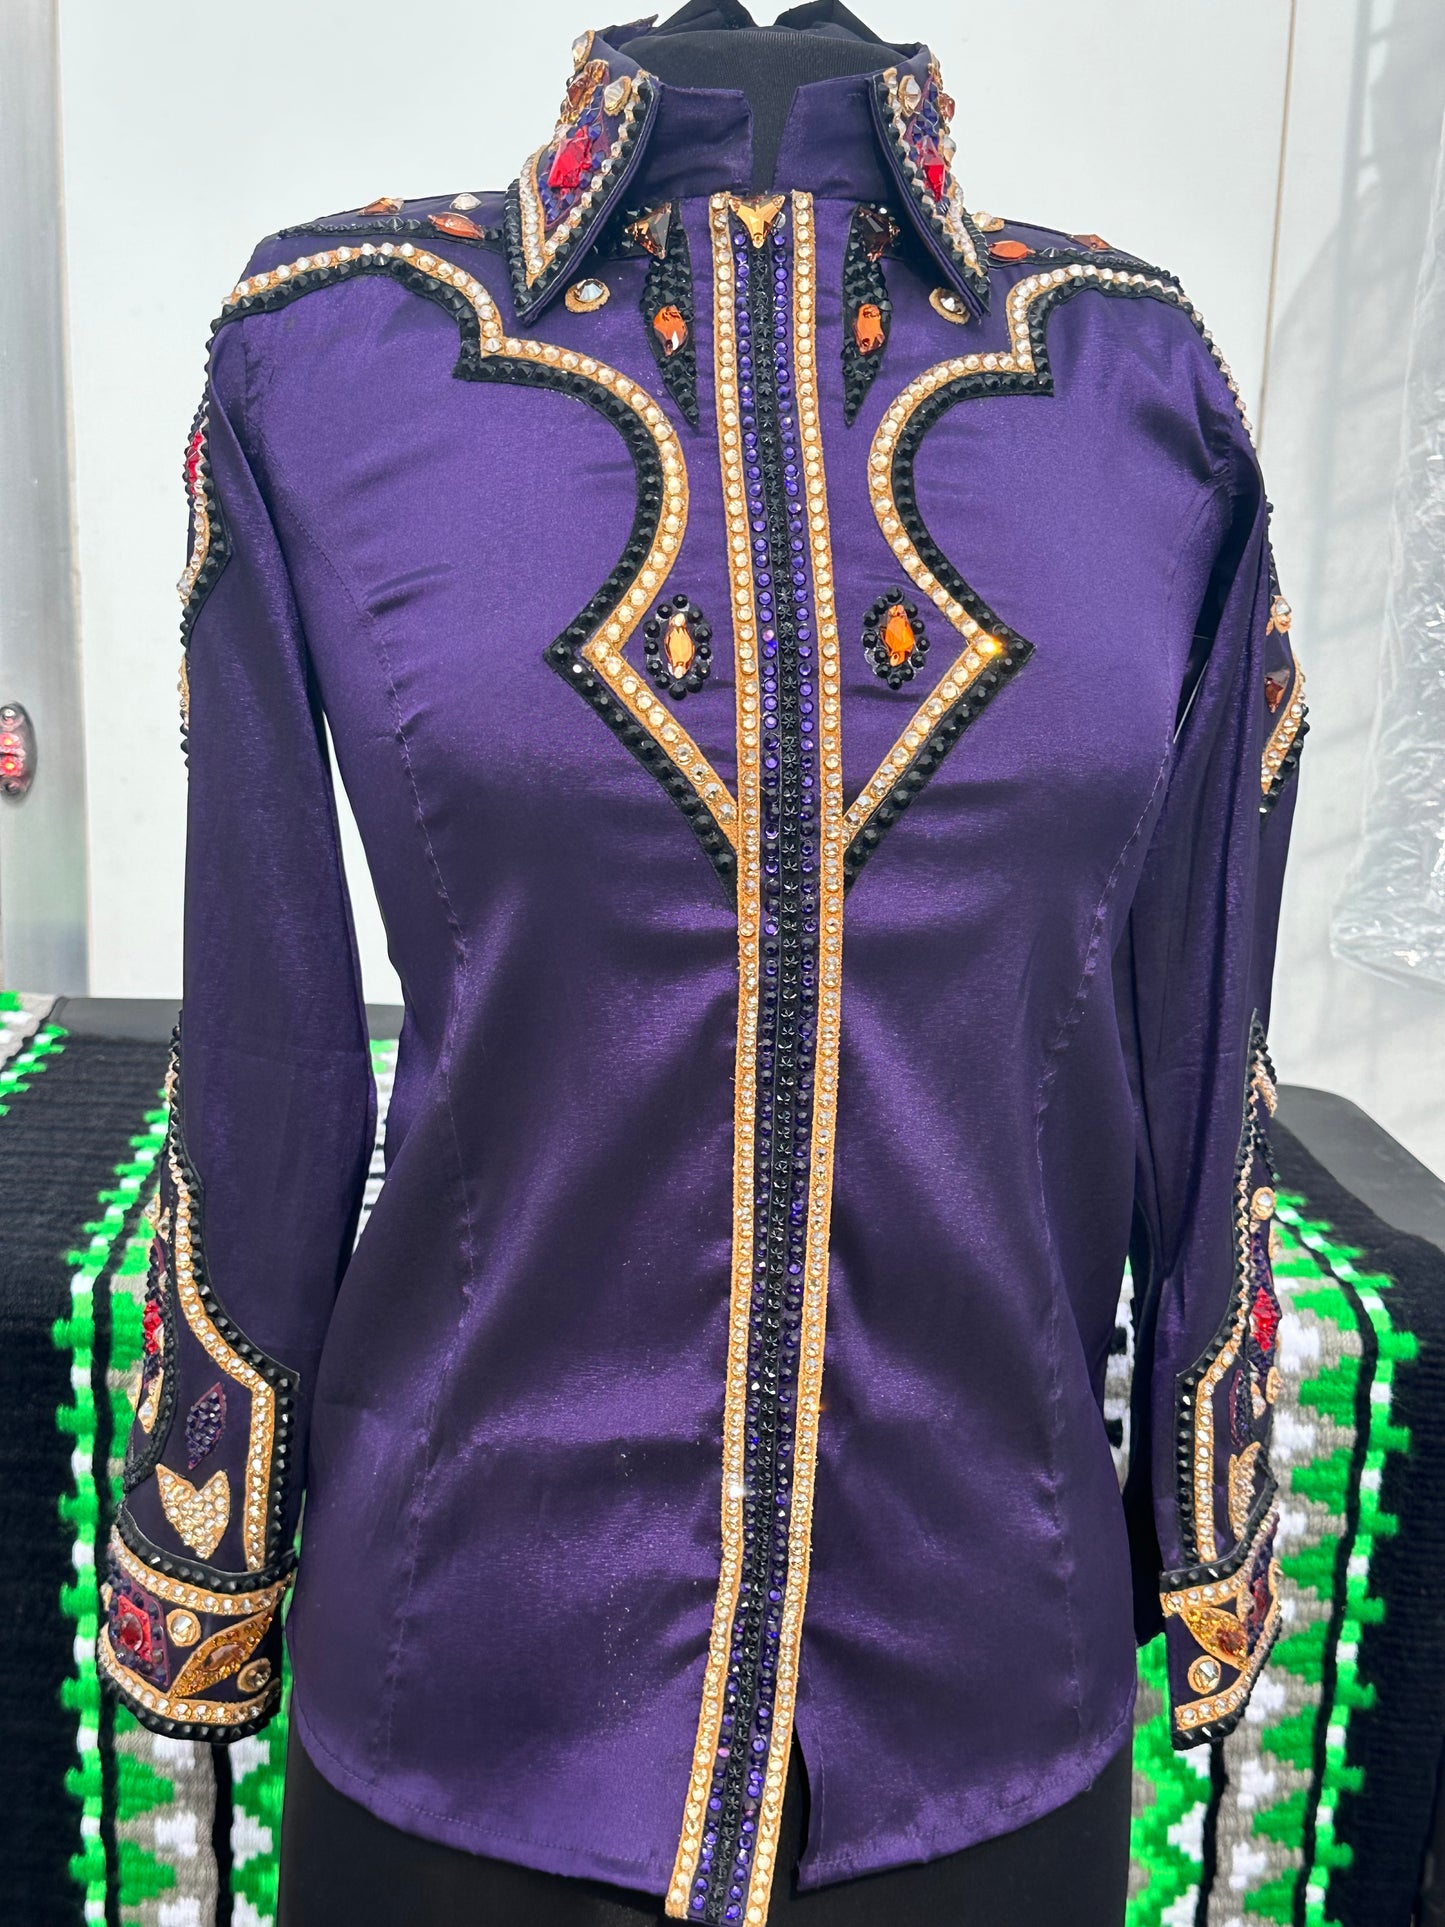 XS day shirt stretch taffeta deep purple french tan black and hints of ruby